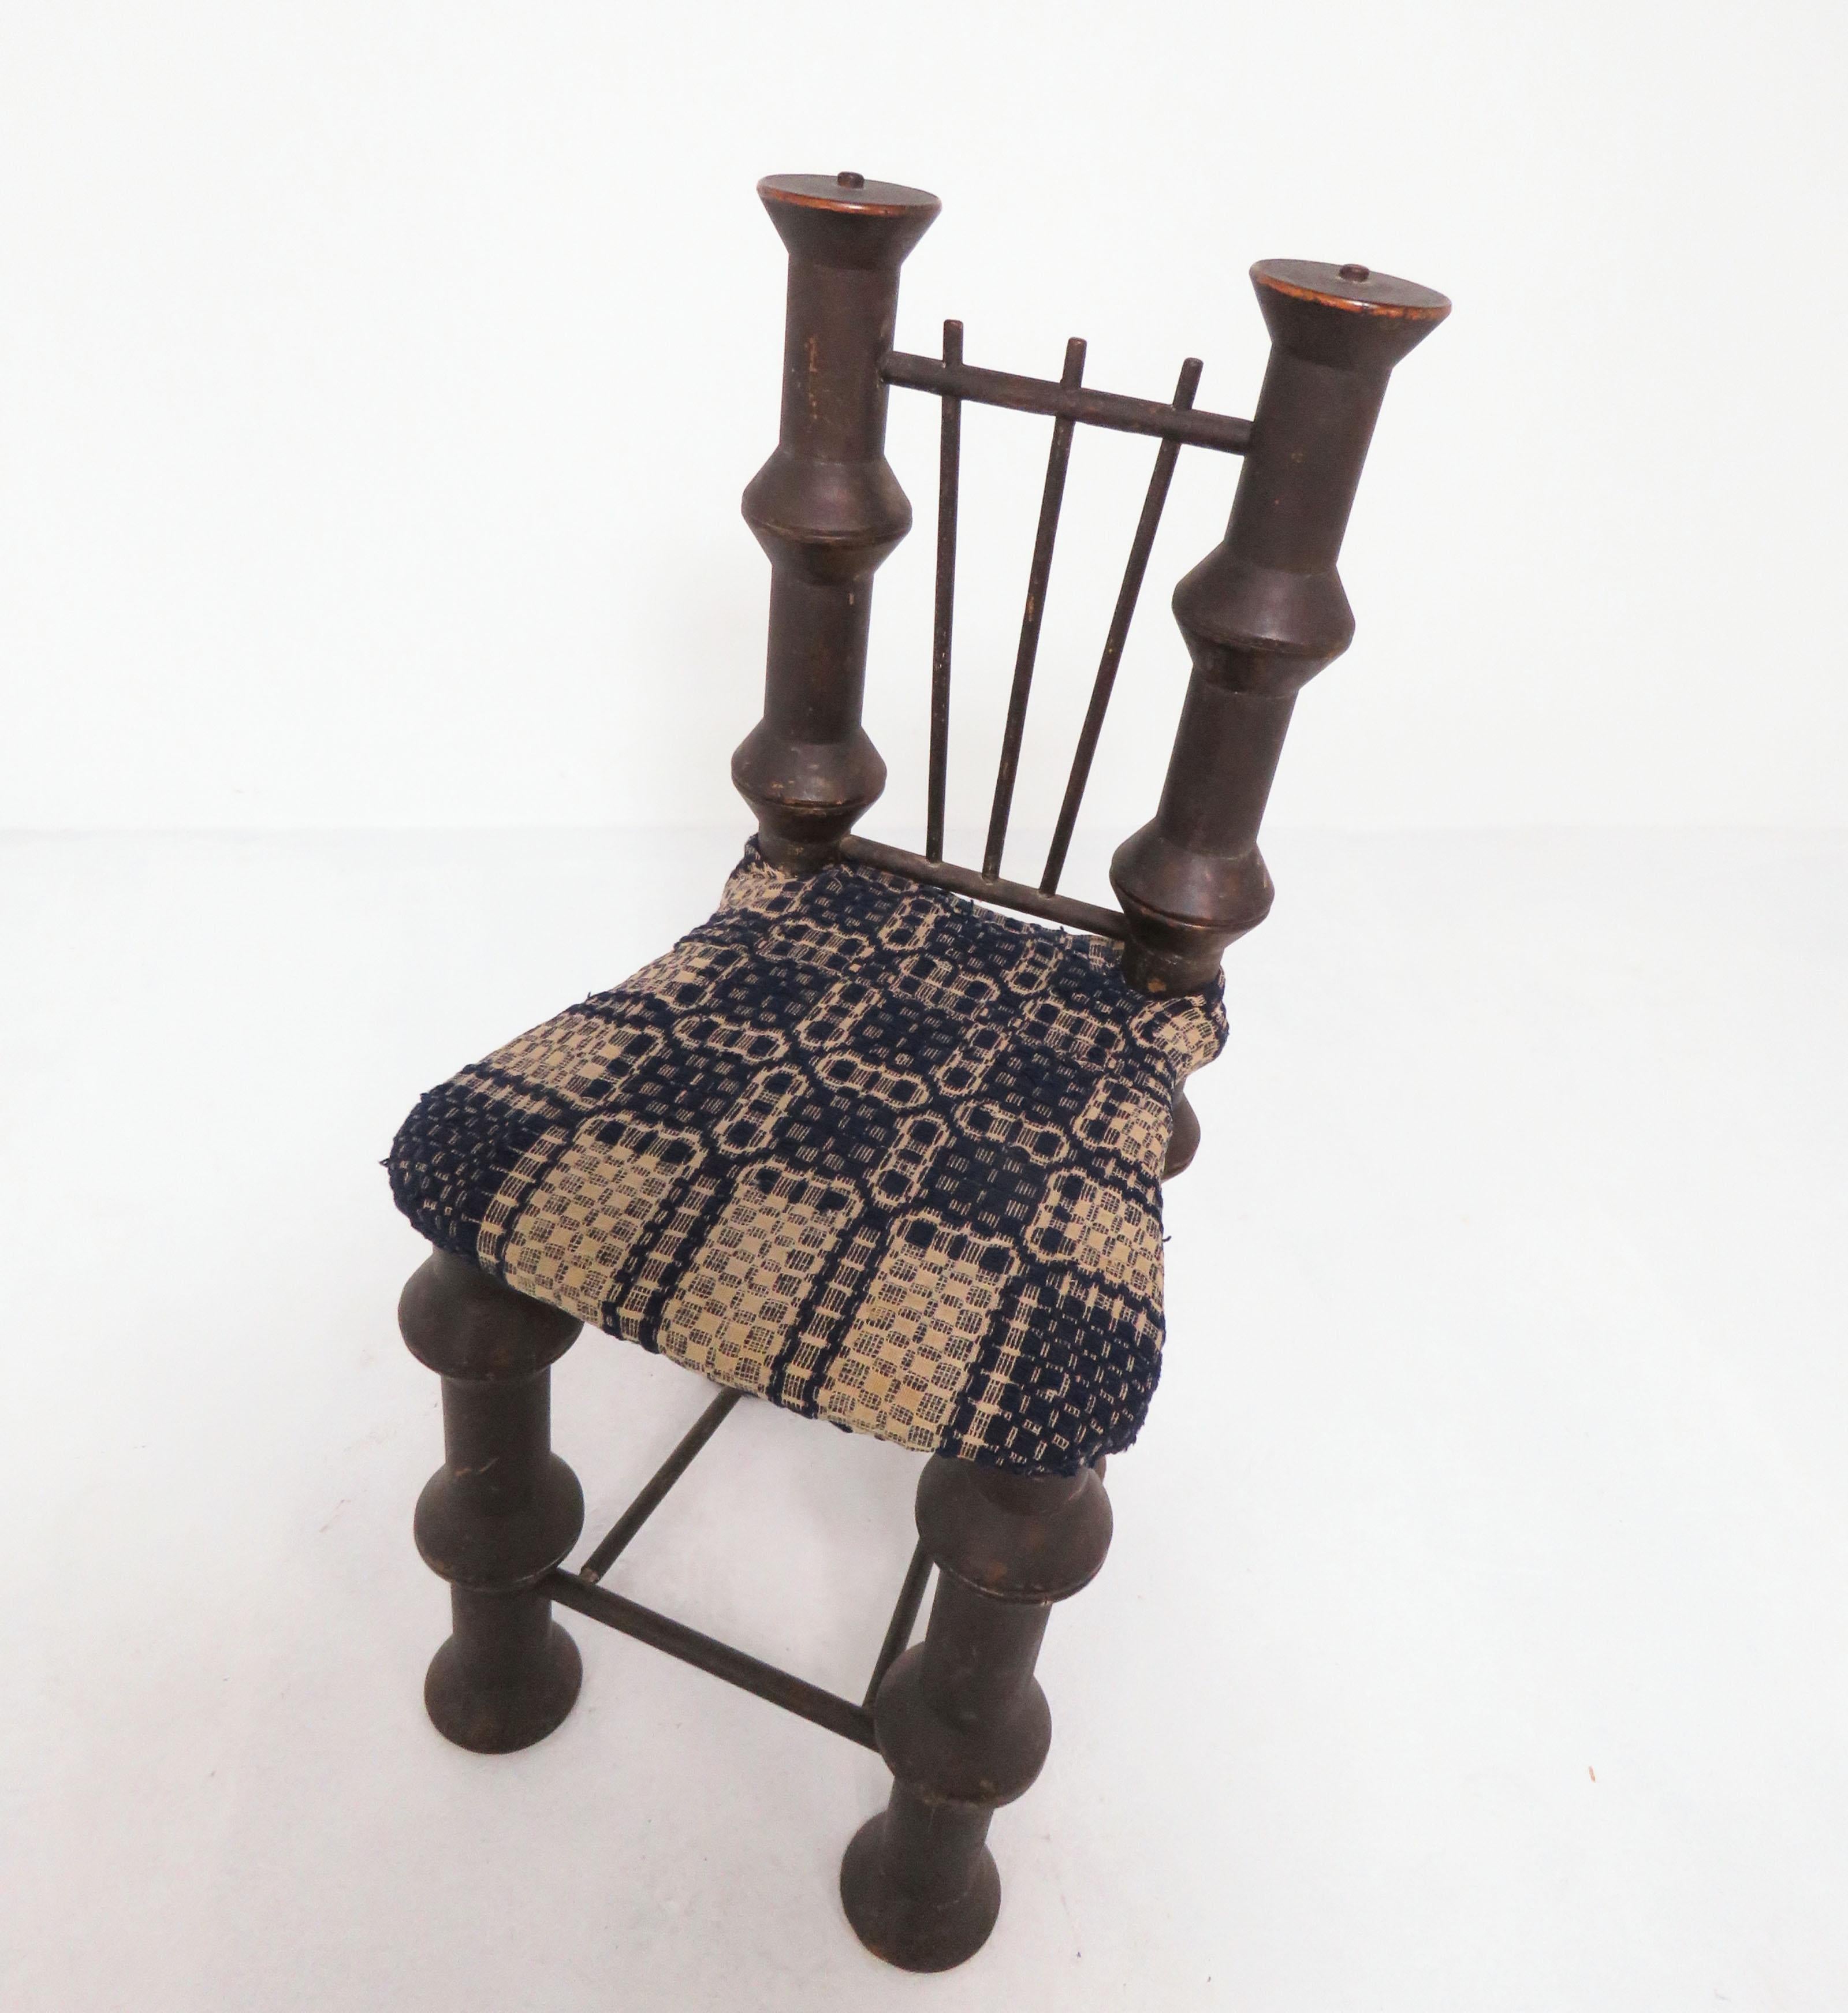 Upholstery Early 20th Century Folk Art Industrial Era Spool Chair